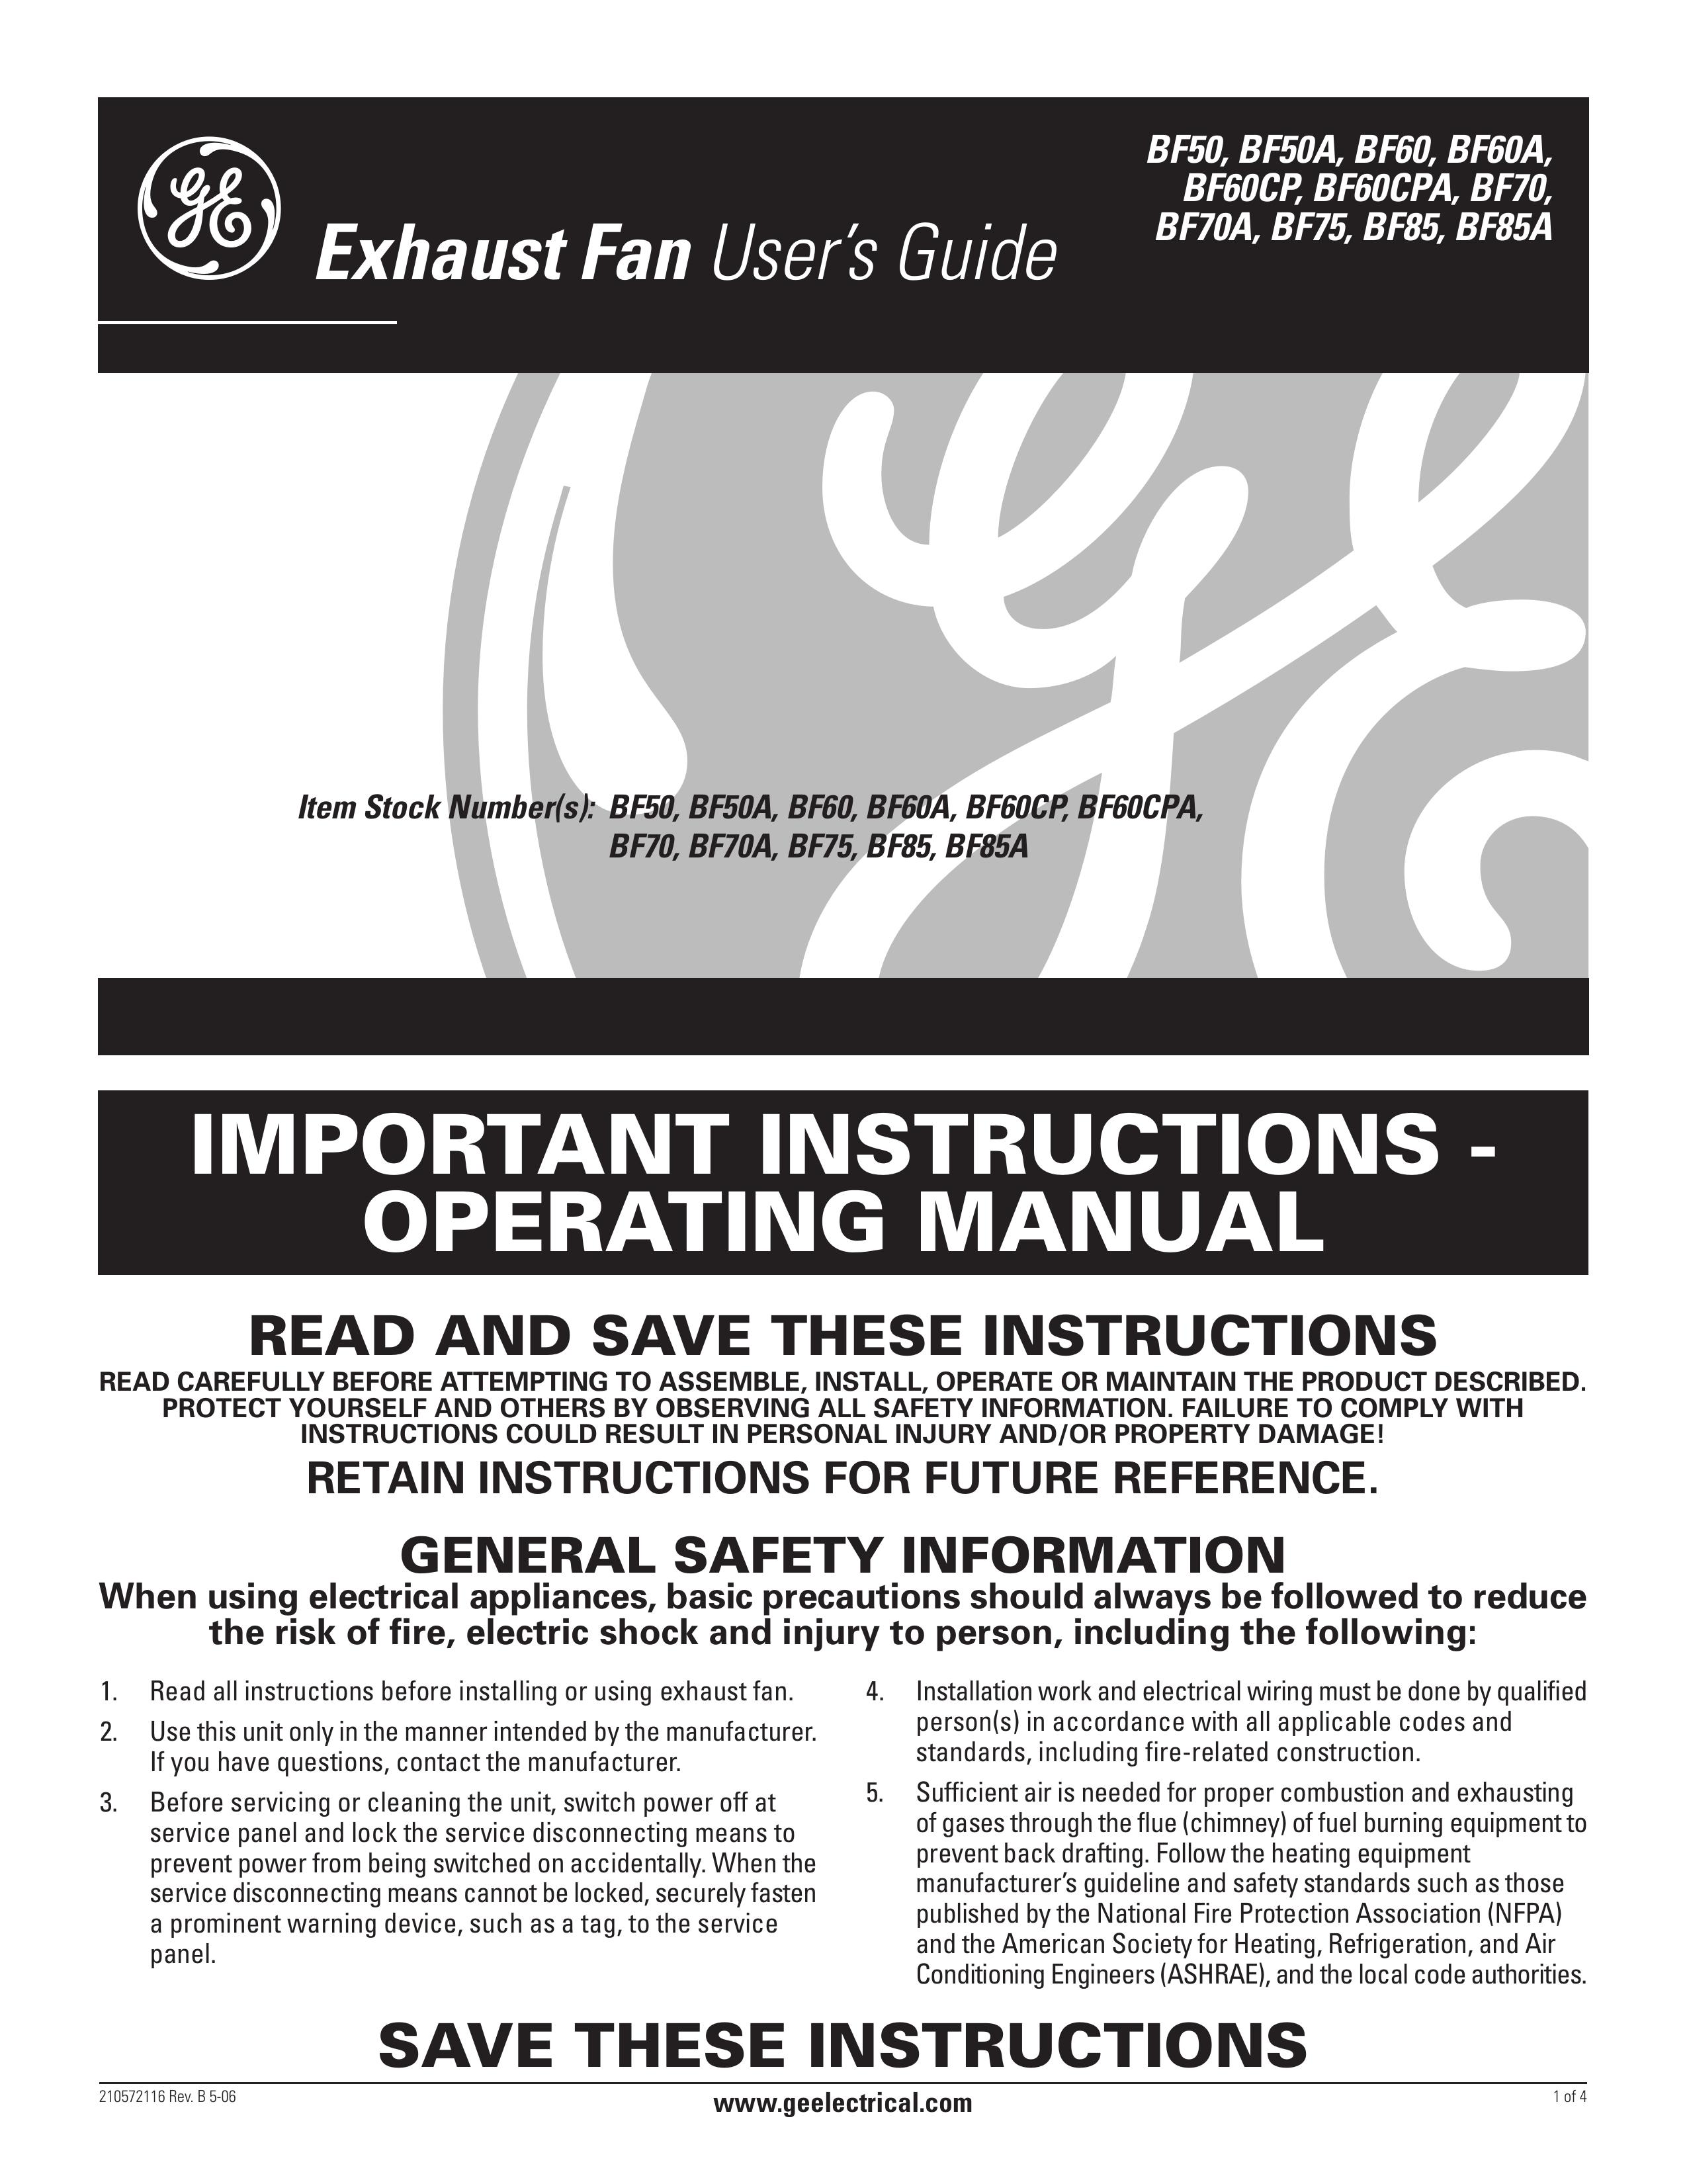 GE BF75 Ventilation Hood User Manual